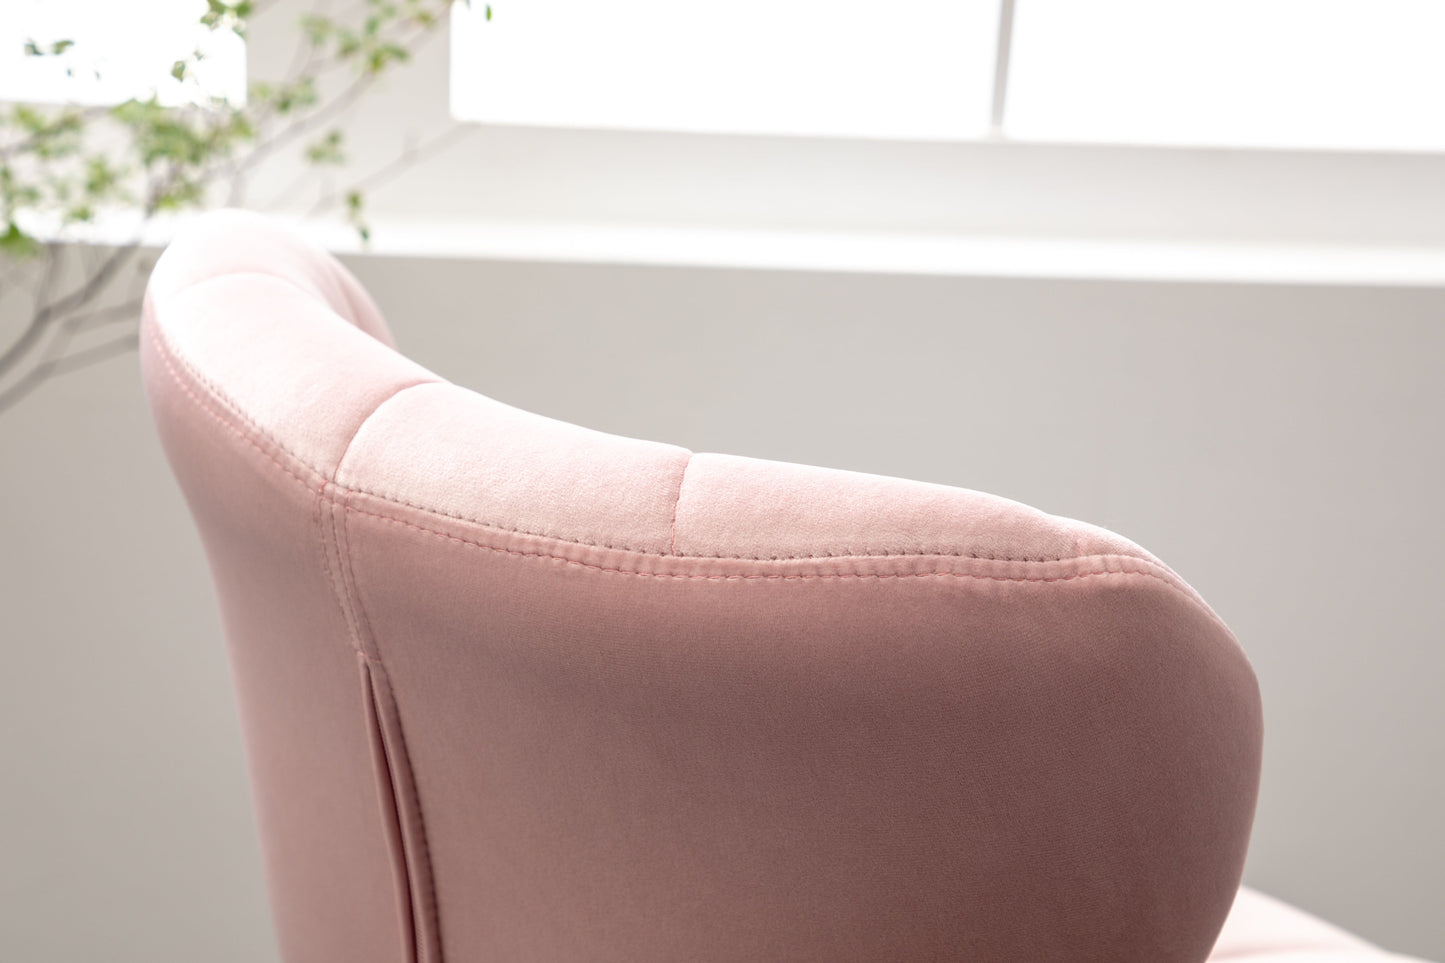 Ellston Upholstered Adjustable Swivel Barstools in Pink, Set of 2